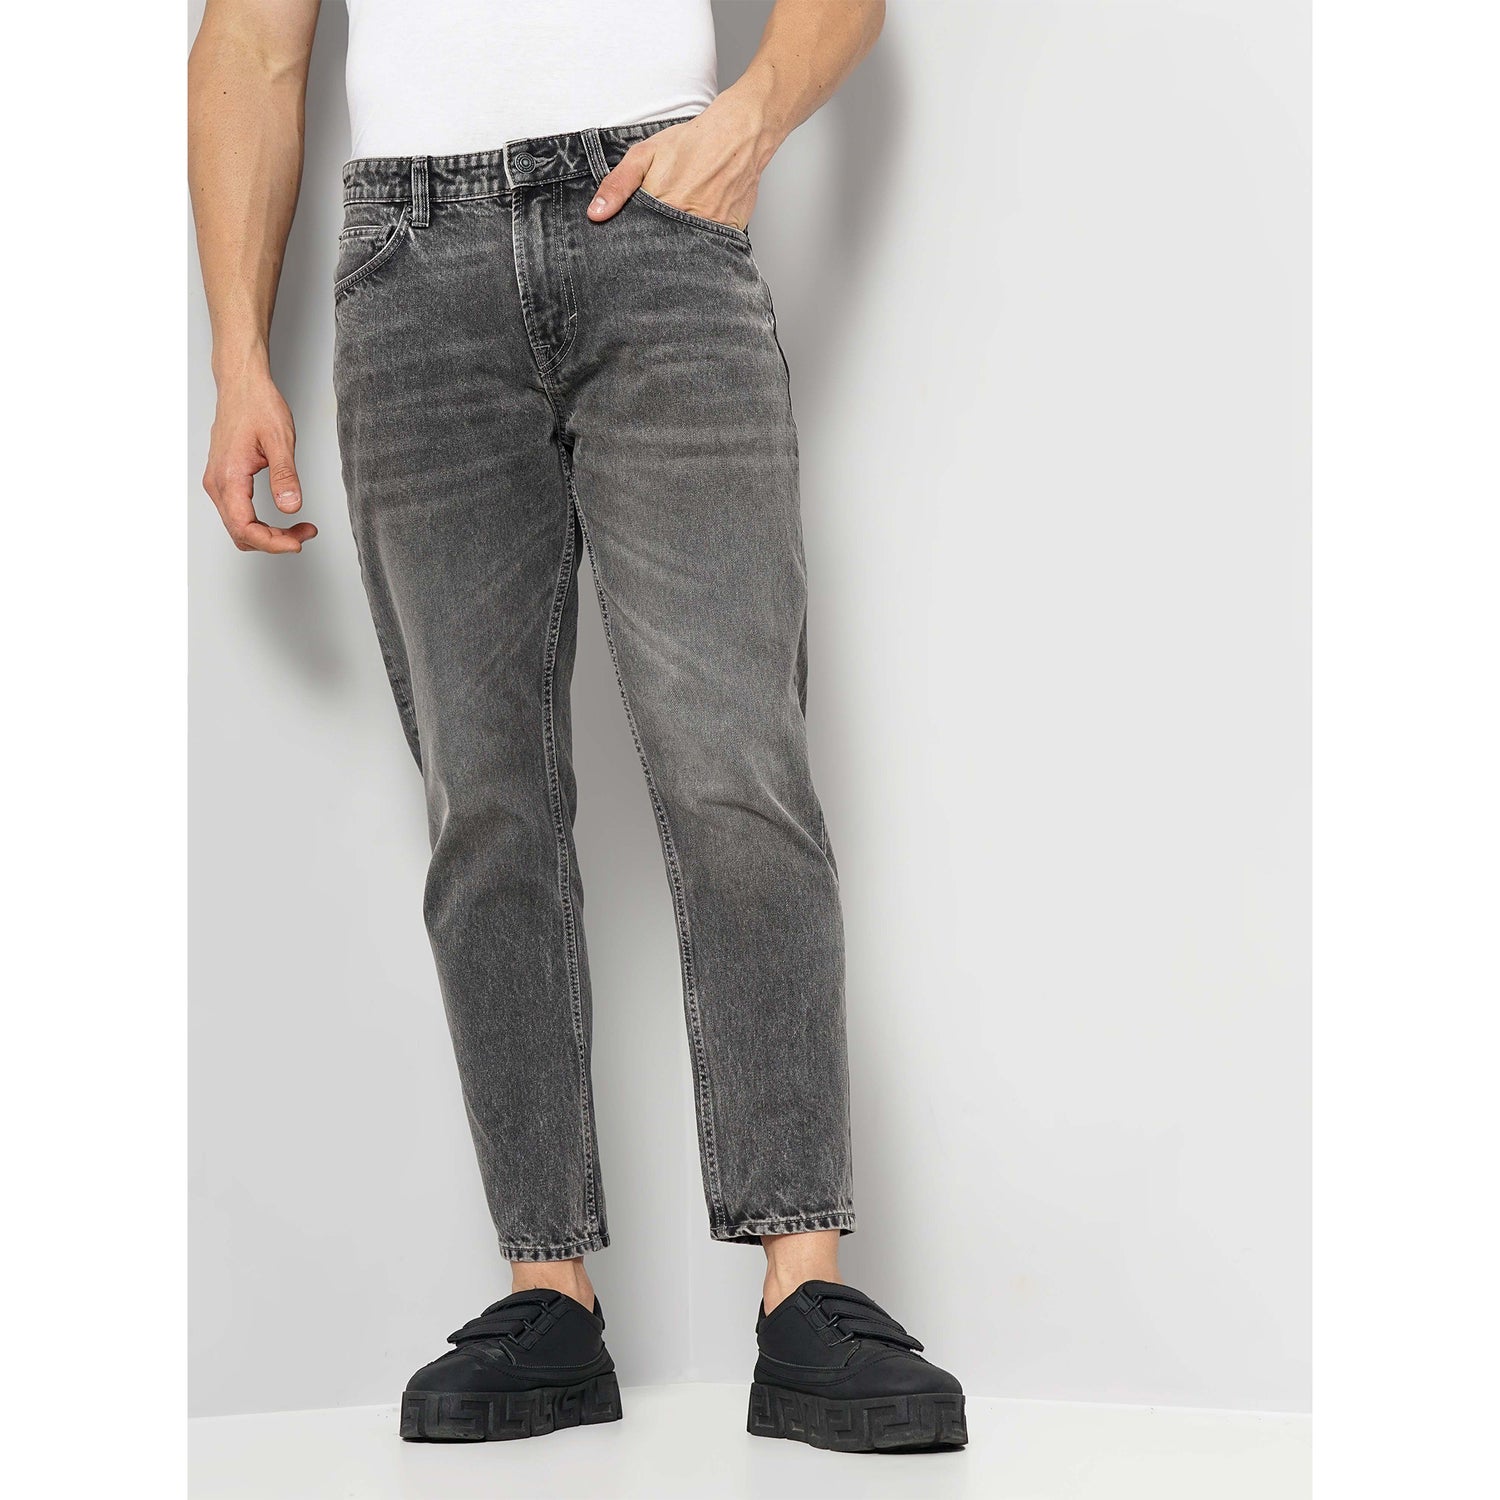 Men's Solid Grey Cotton Regular Jeans (BORELAX)